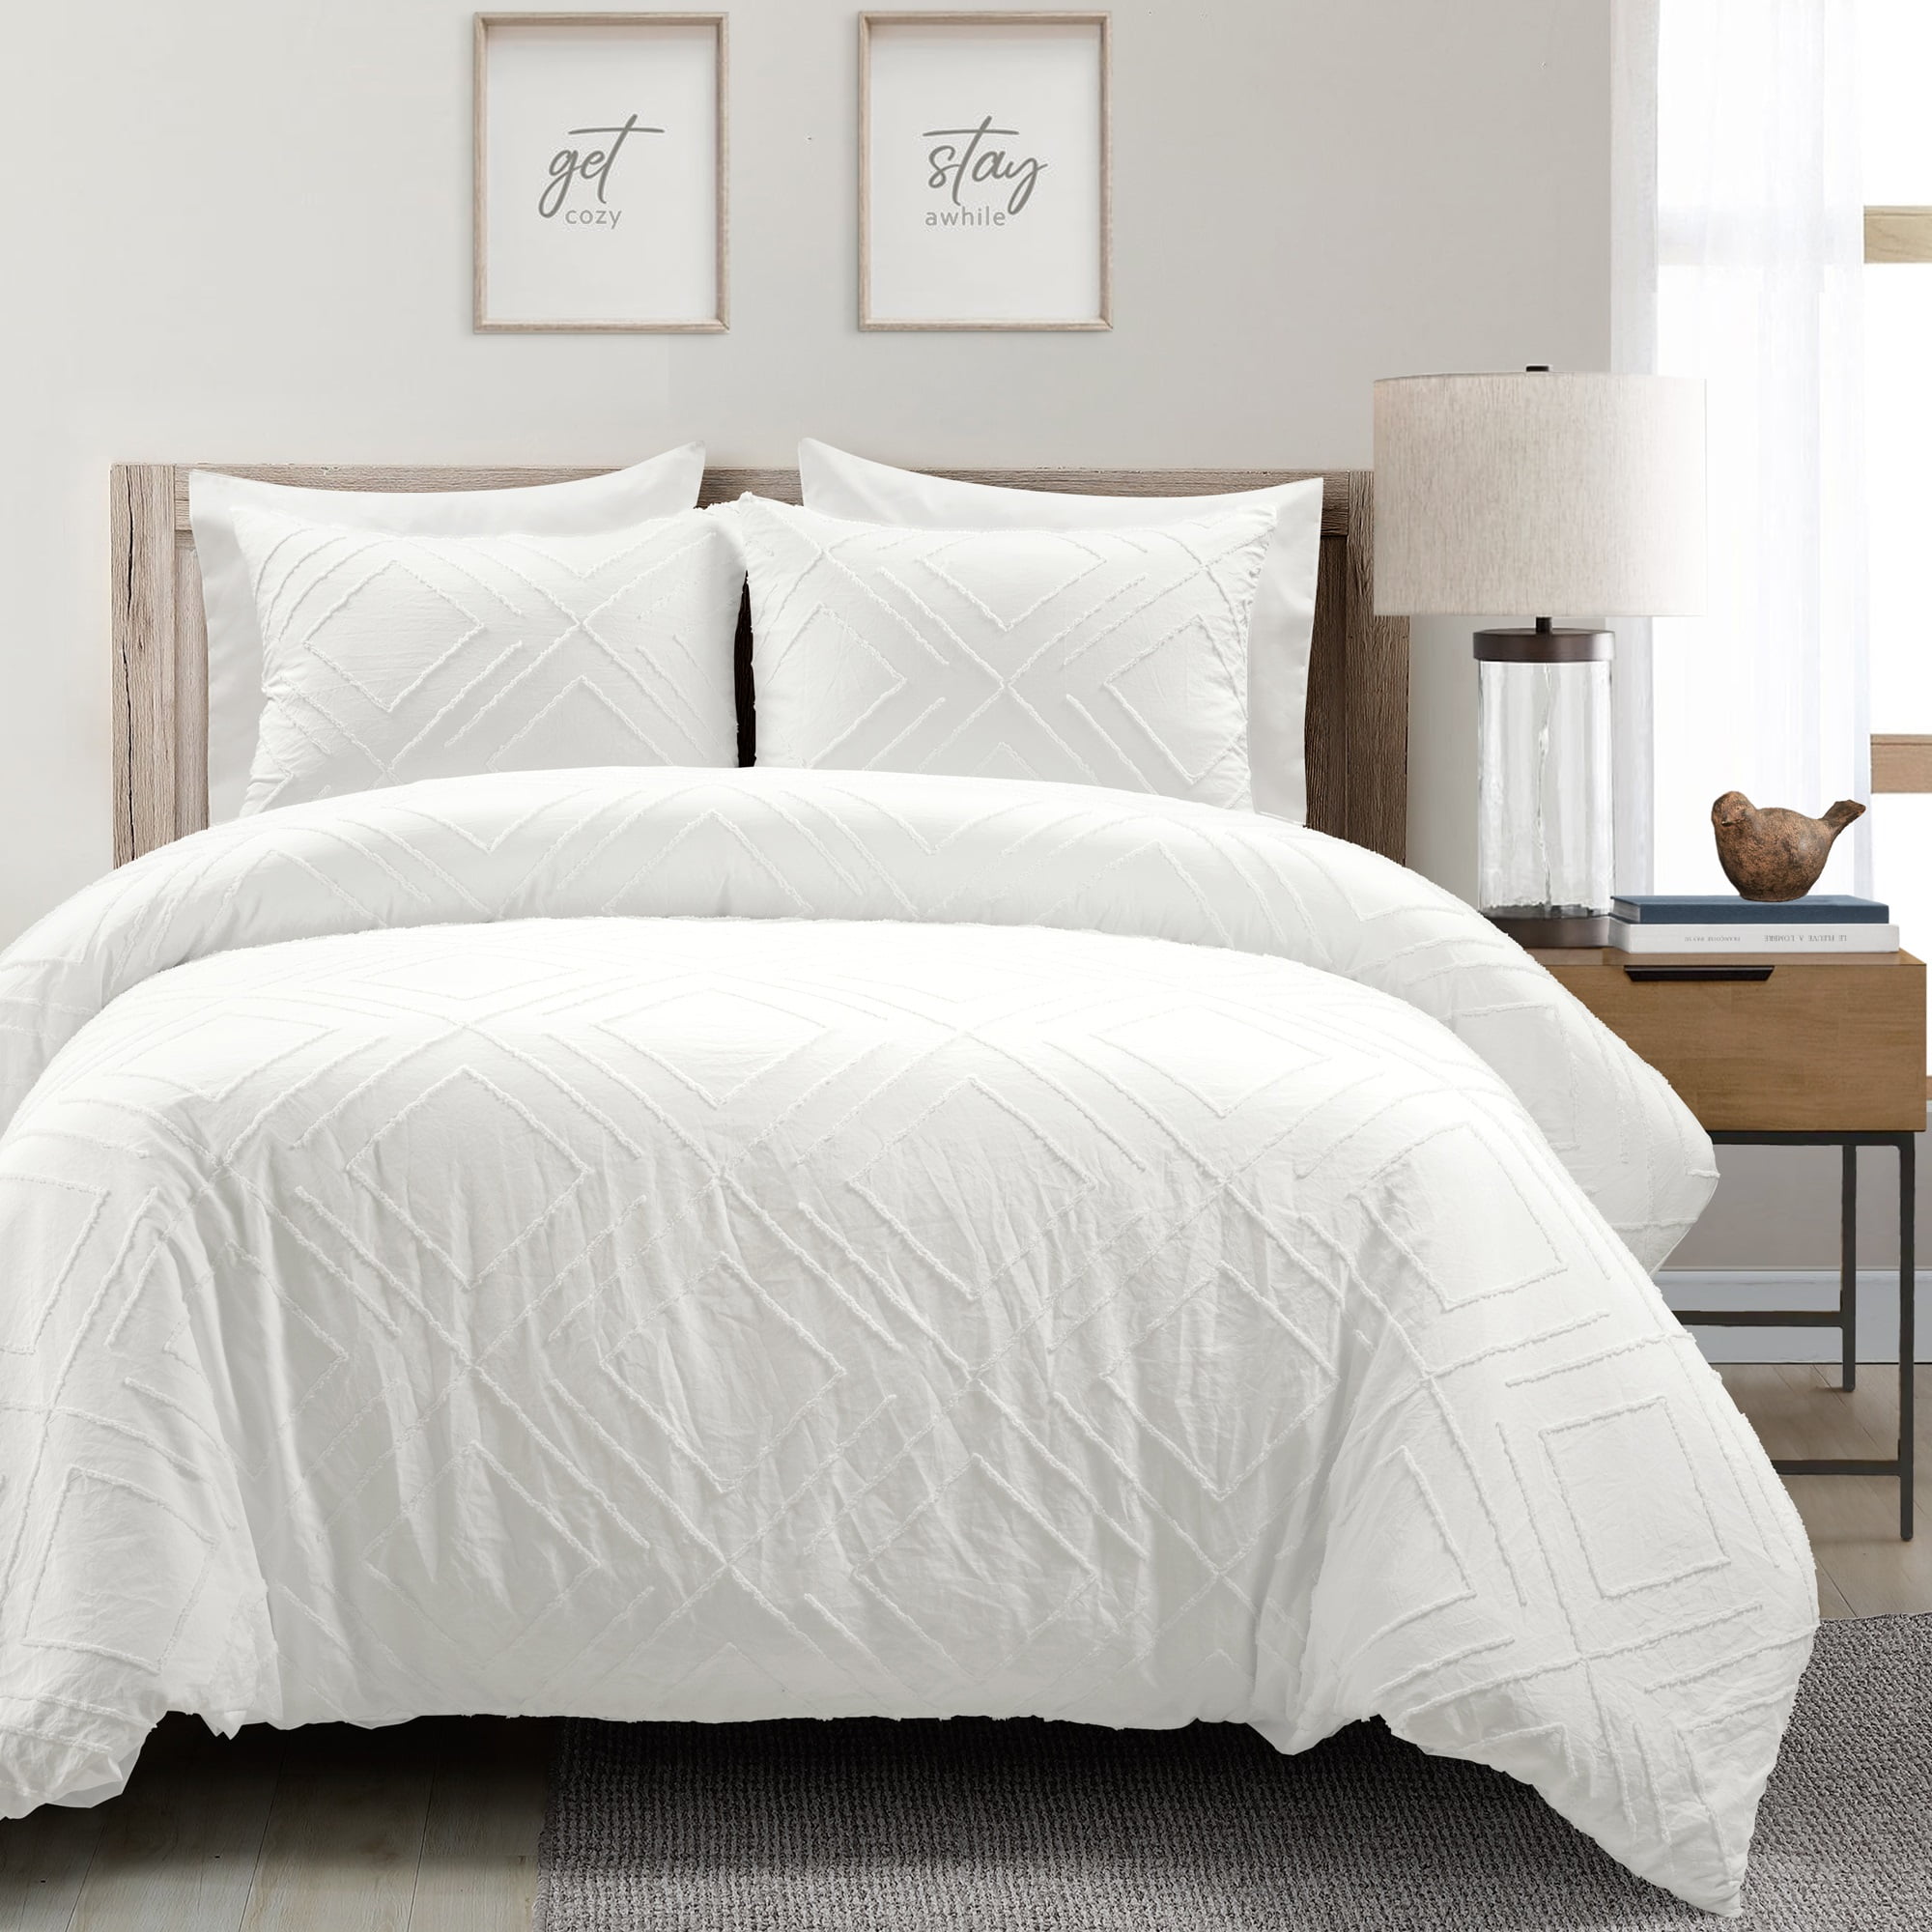 Nettles Soft and Cozy Urtica Fiber Comforter US sizes Duvet Padded Warm 